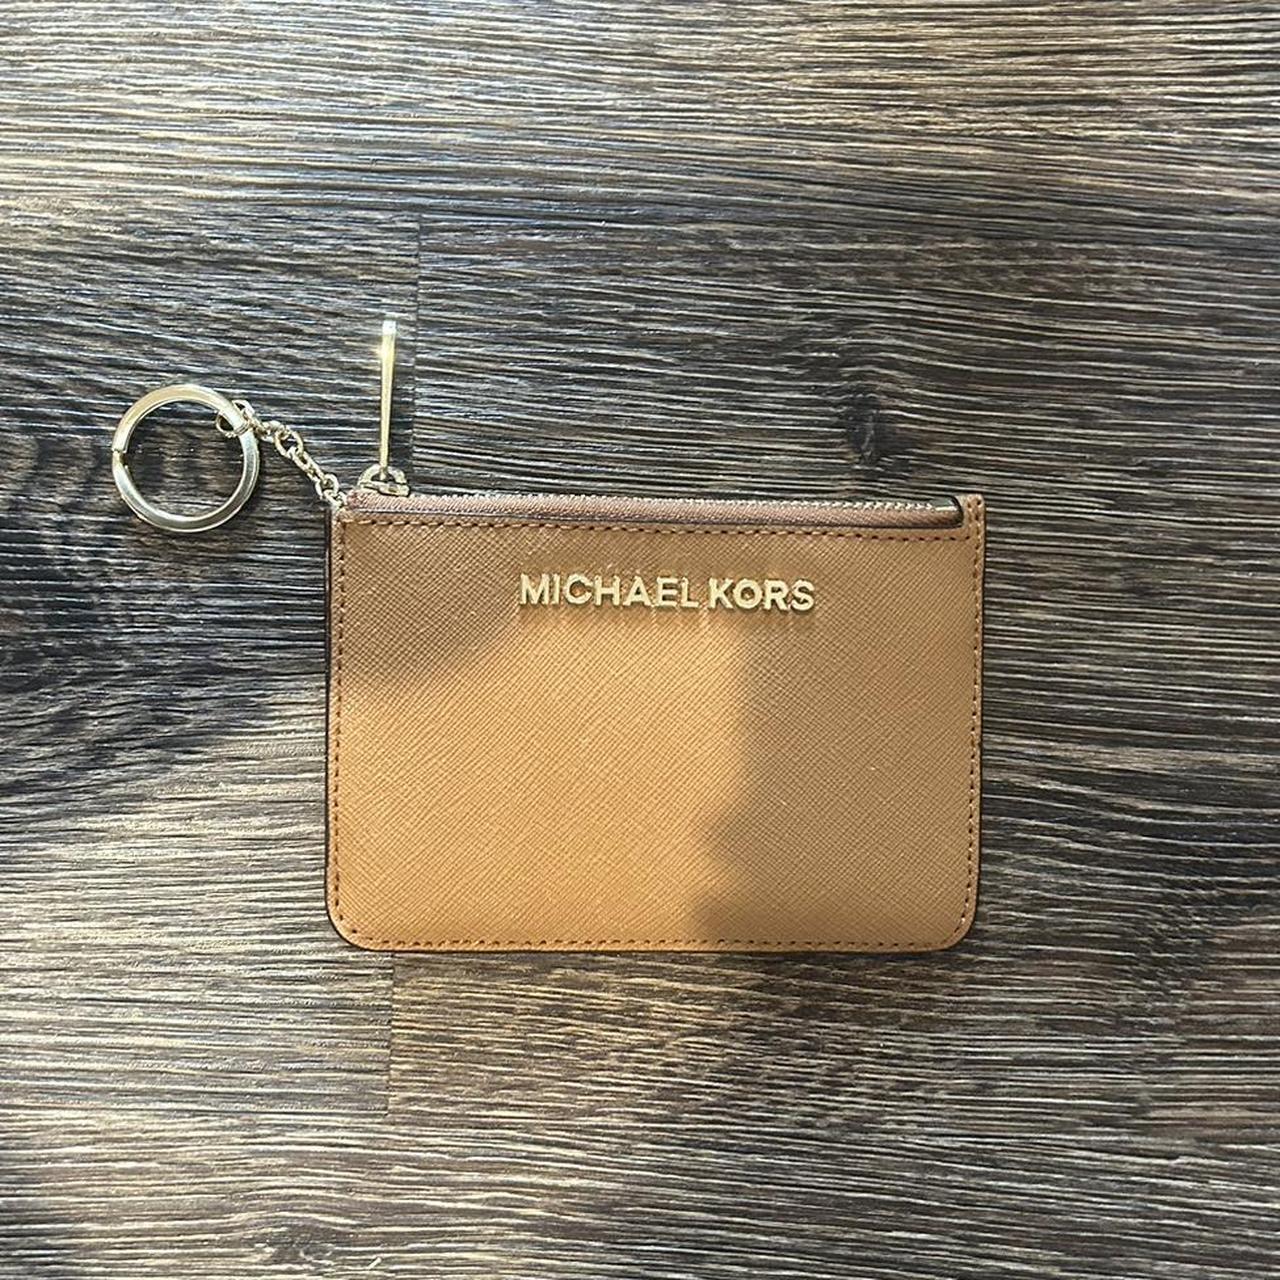 Michael kors keychain card holder - Depop